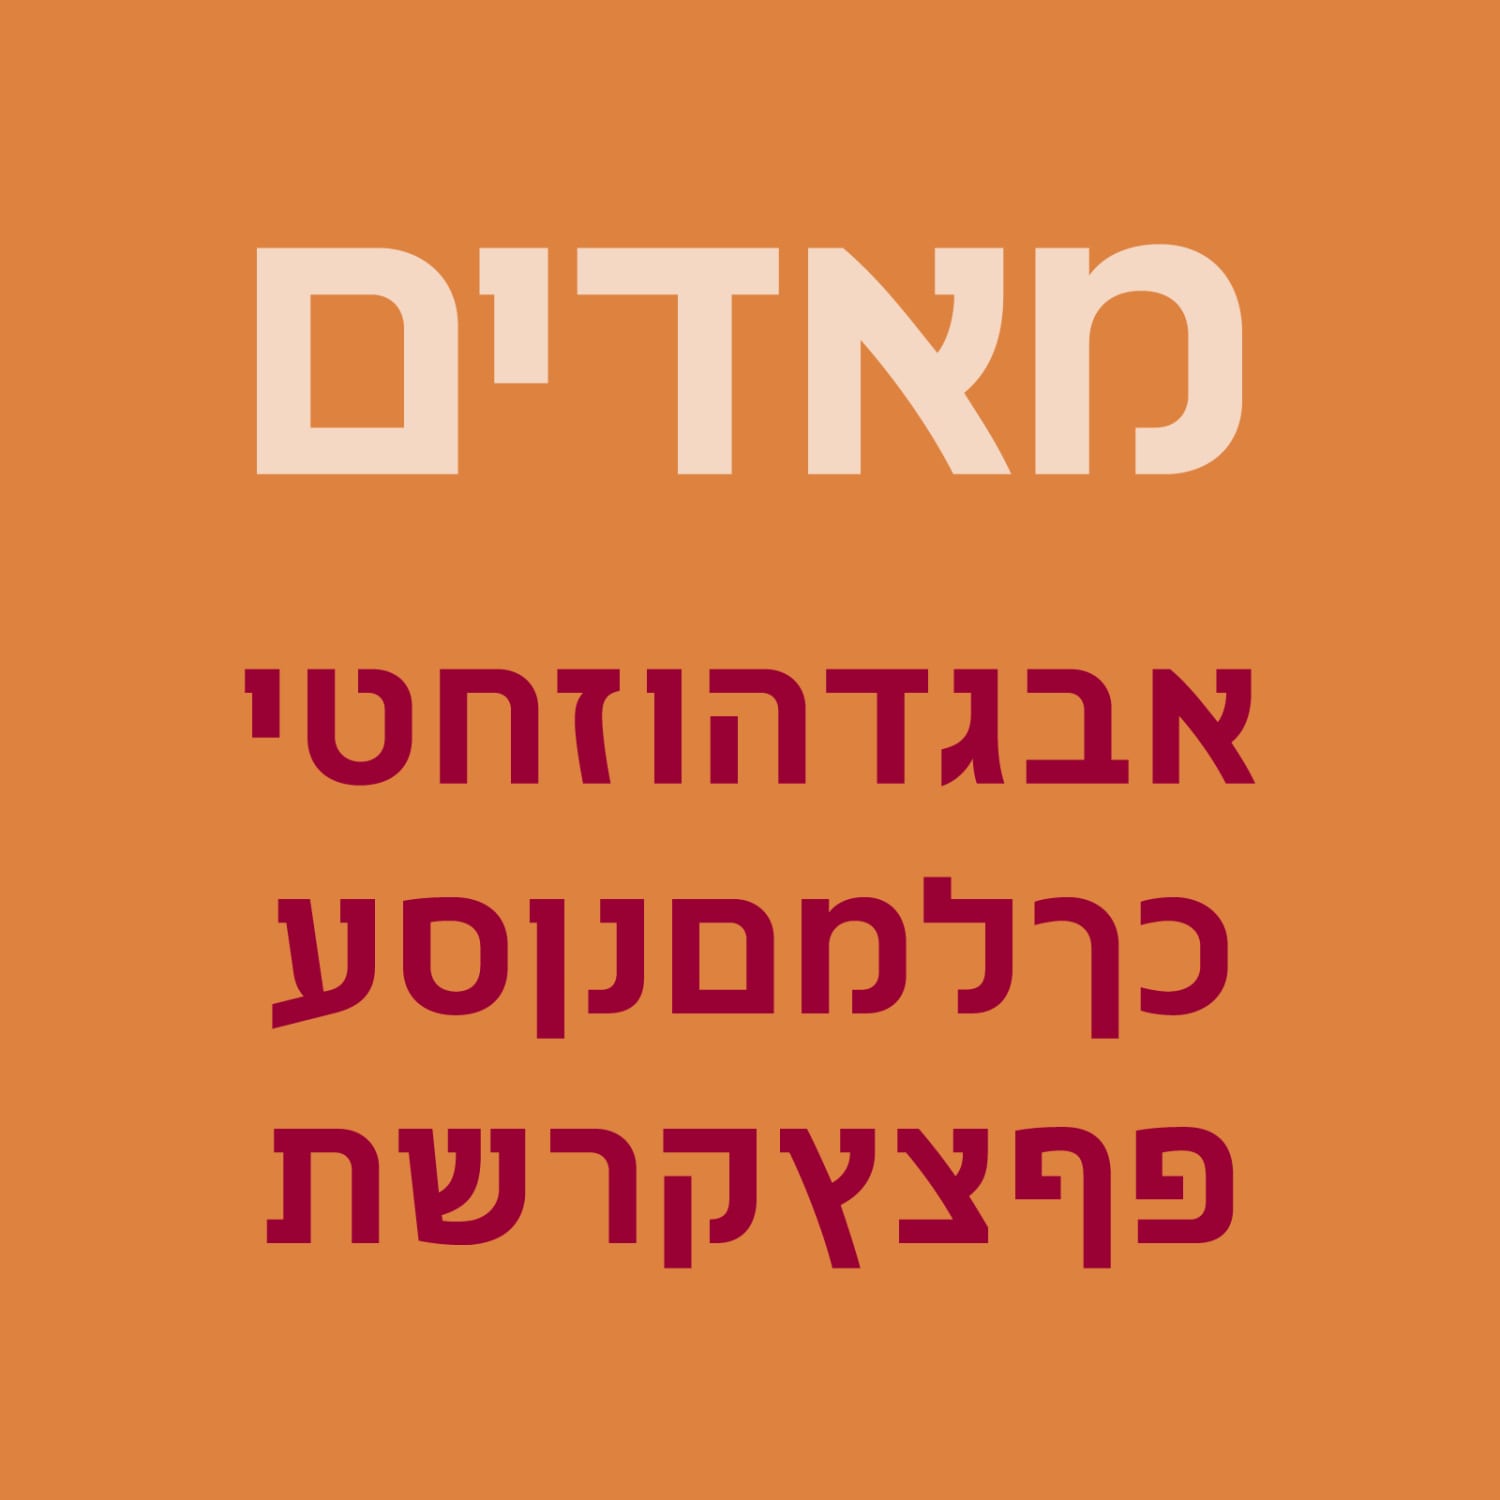 Here's the complete Hebrew alphabet for Maadim.